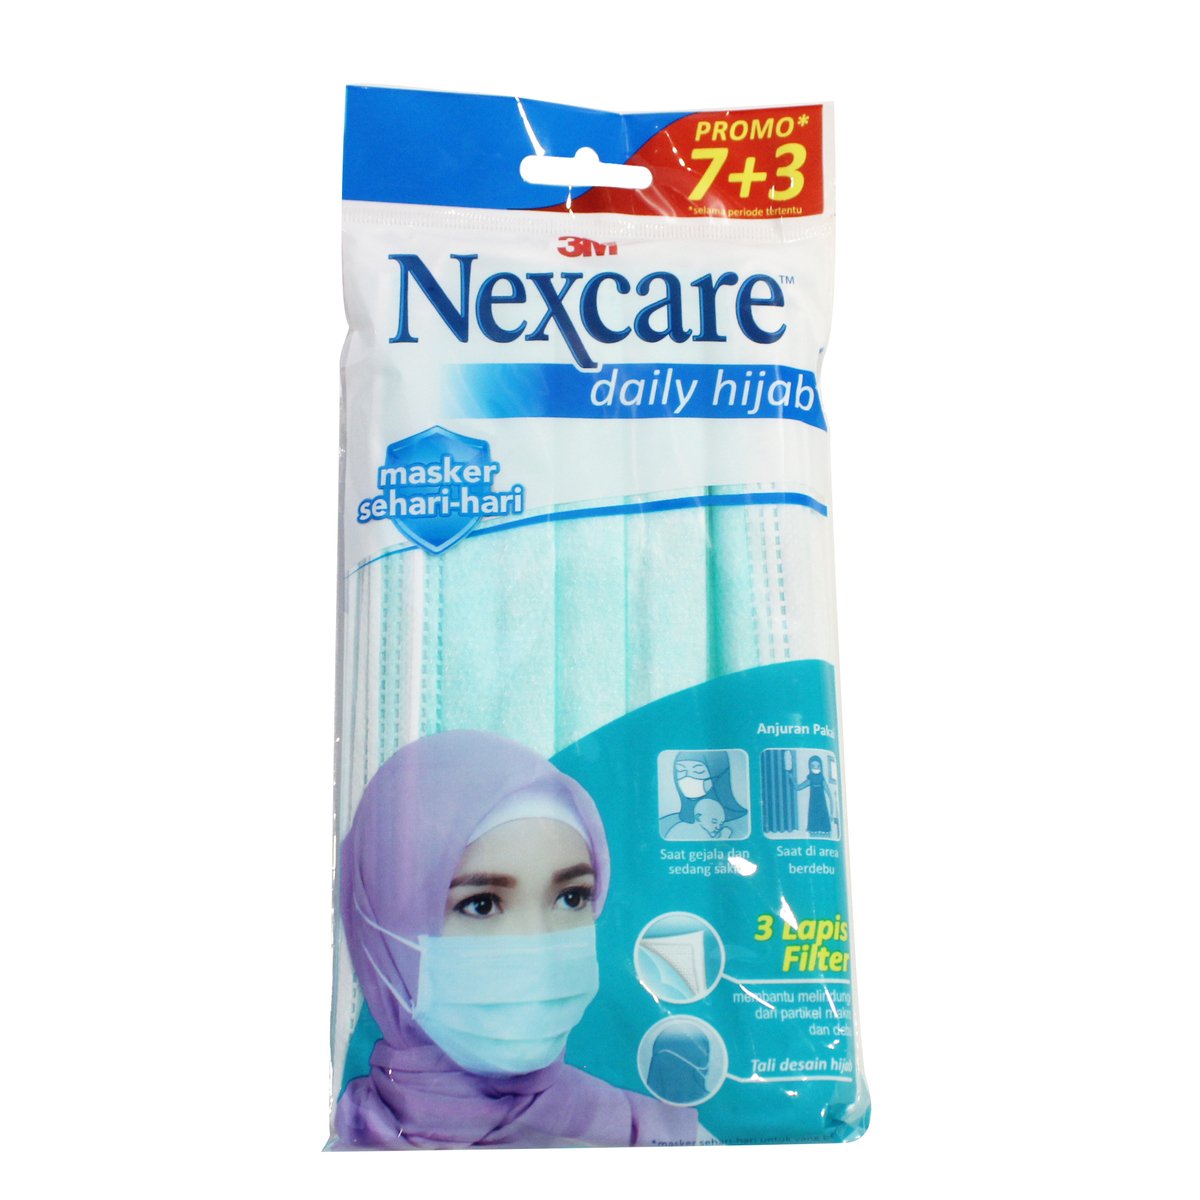 Nexcare Hijab Mask 7+3